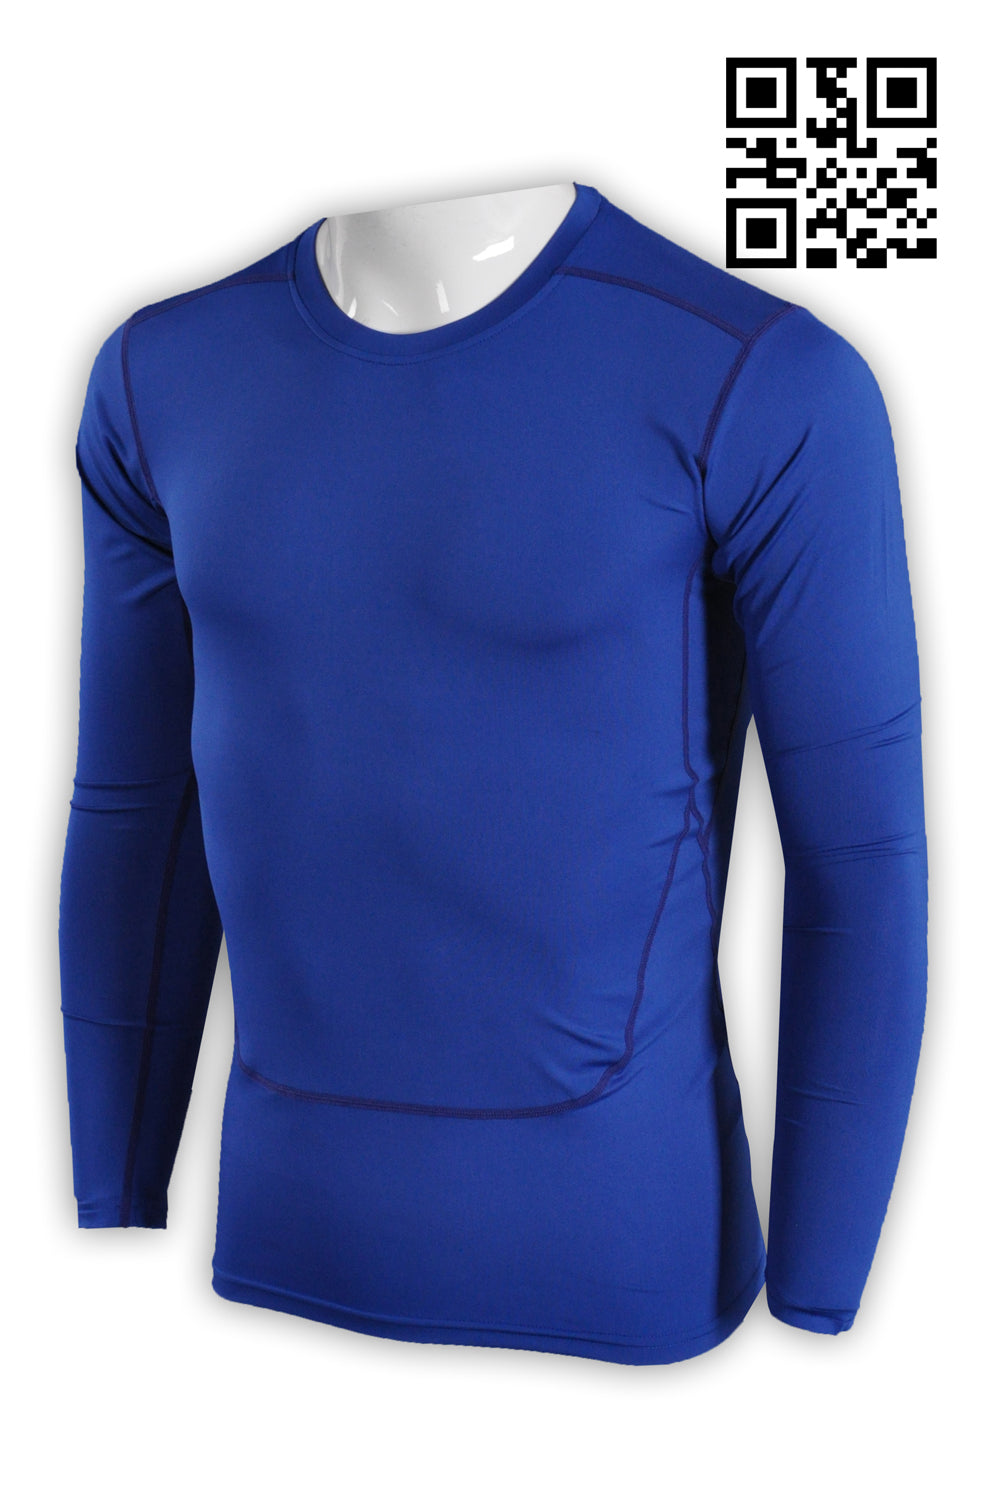 W174設計純色緊身運動衫 訂造健身專用T恤 度身訂造運動長袖T恤 T恤專門店 彩藍色